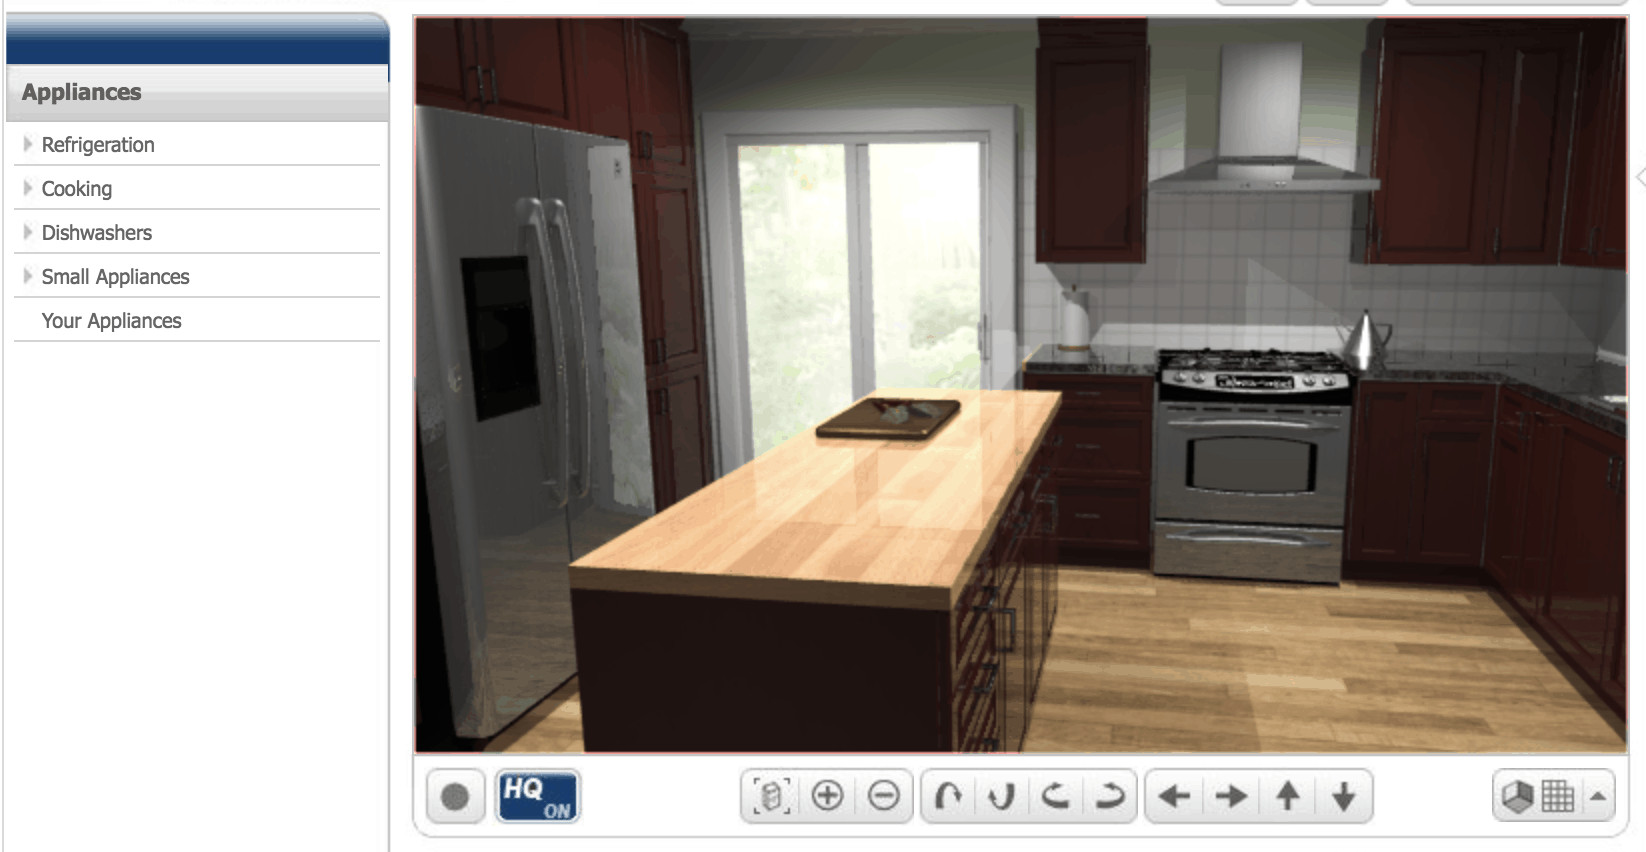 Kitchen Remodeling Programs
 24 Best line Kitchen Design Software Options in 2020